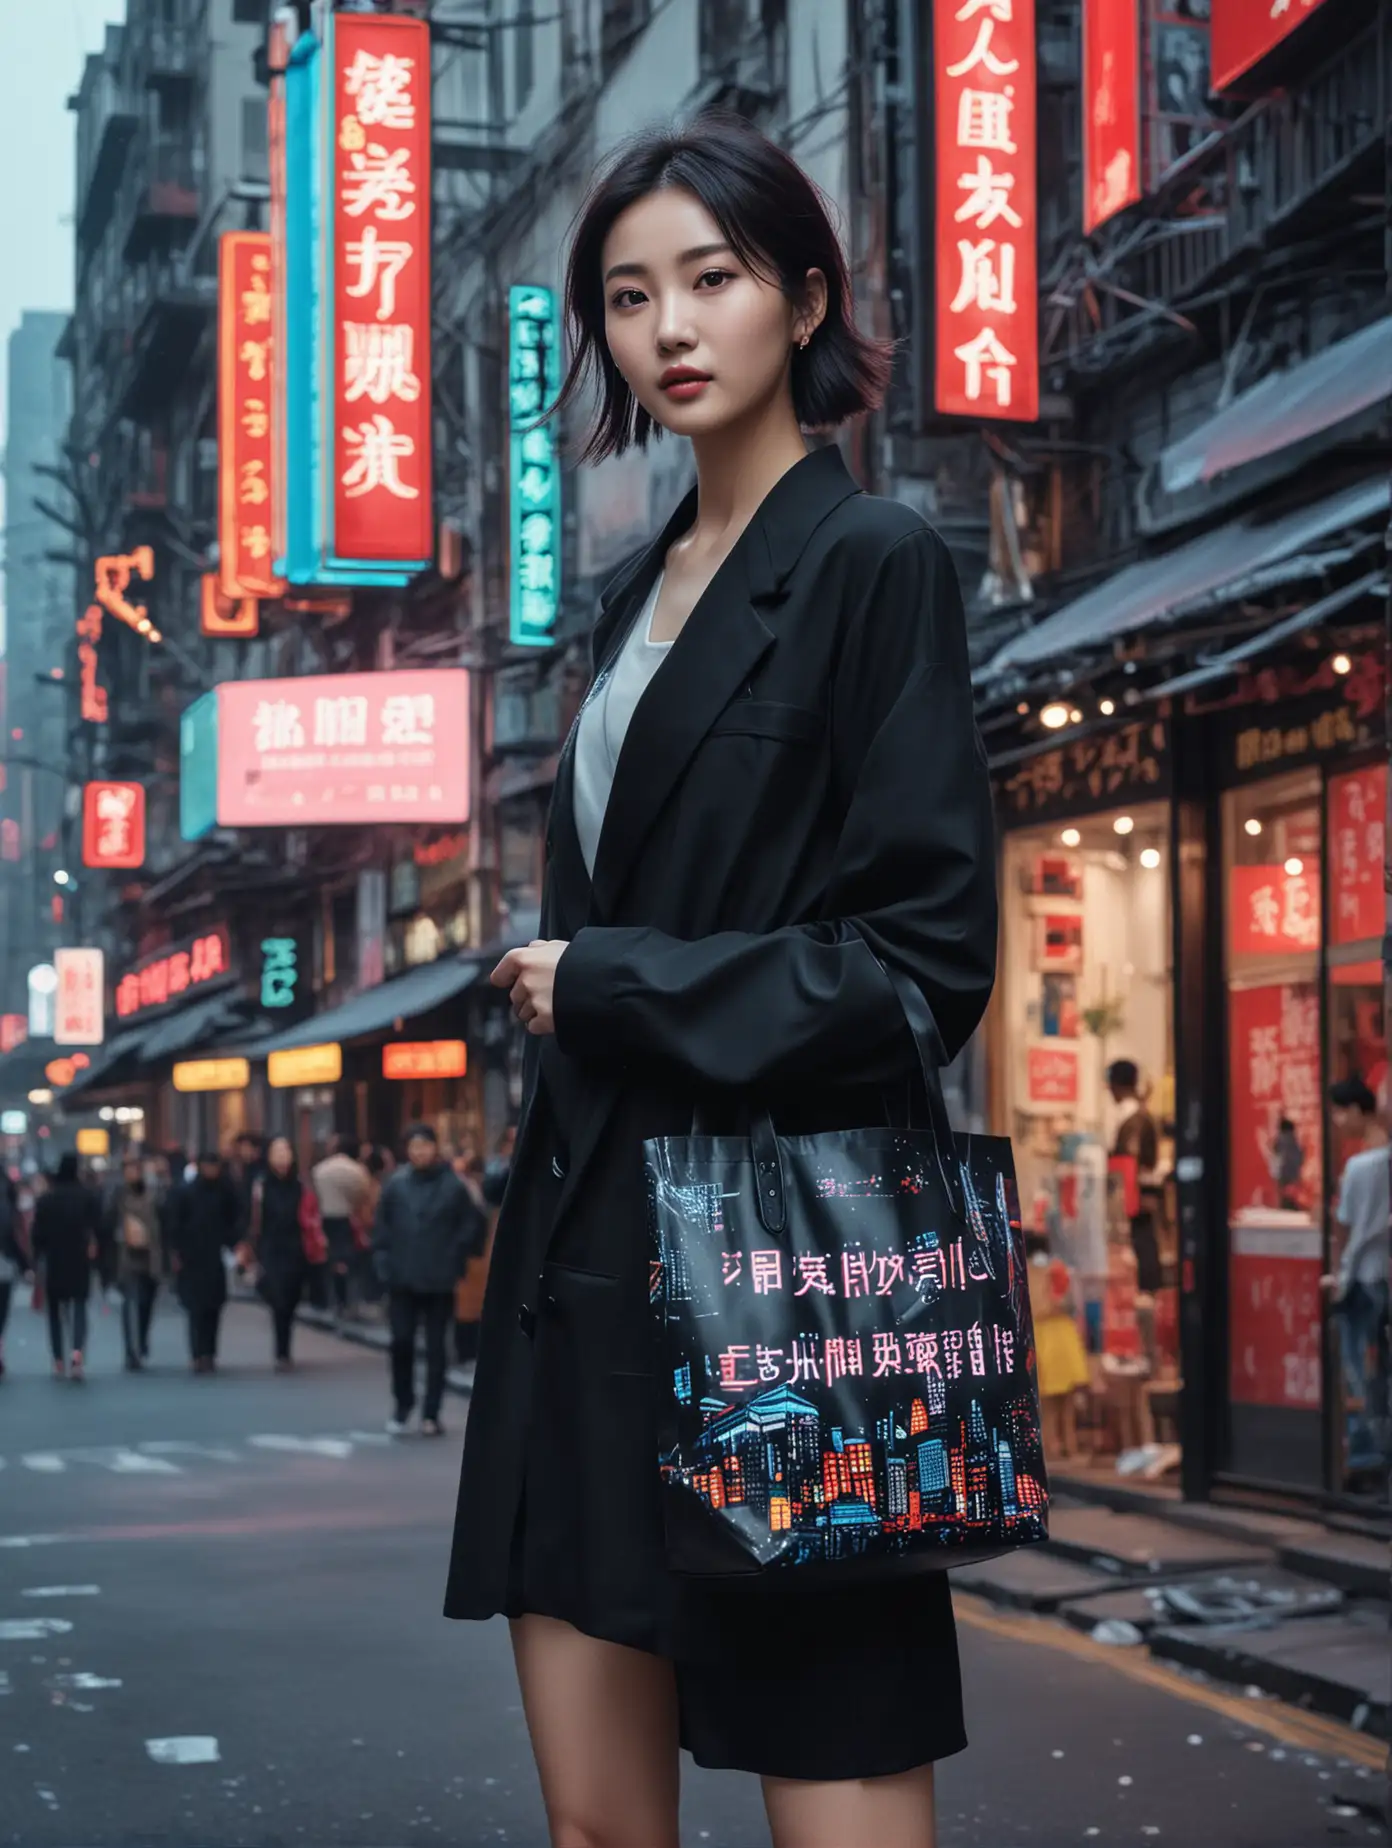 Shanghai Street Fashion Dynamic Pose with Black Shopper Bag